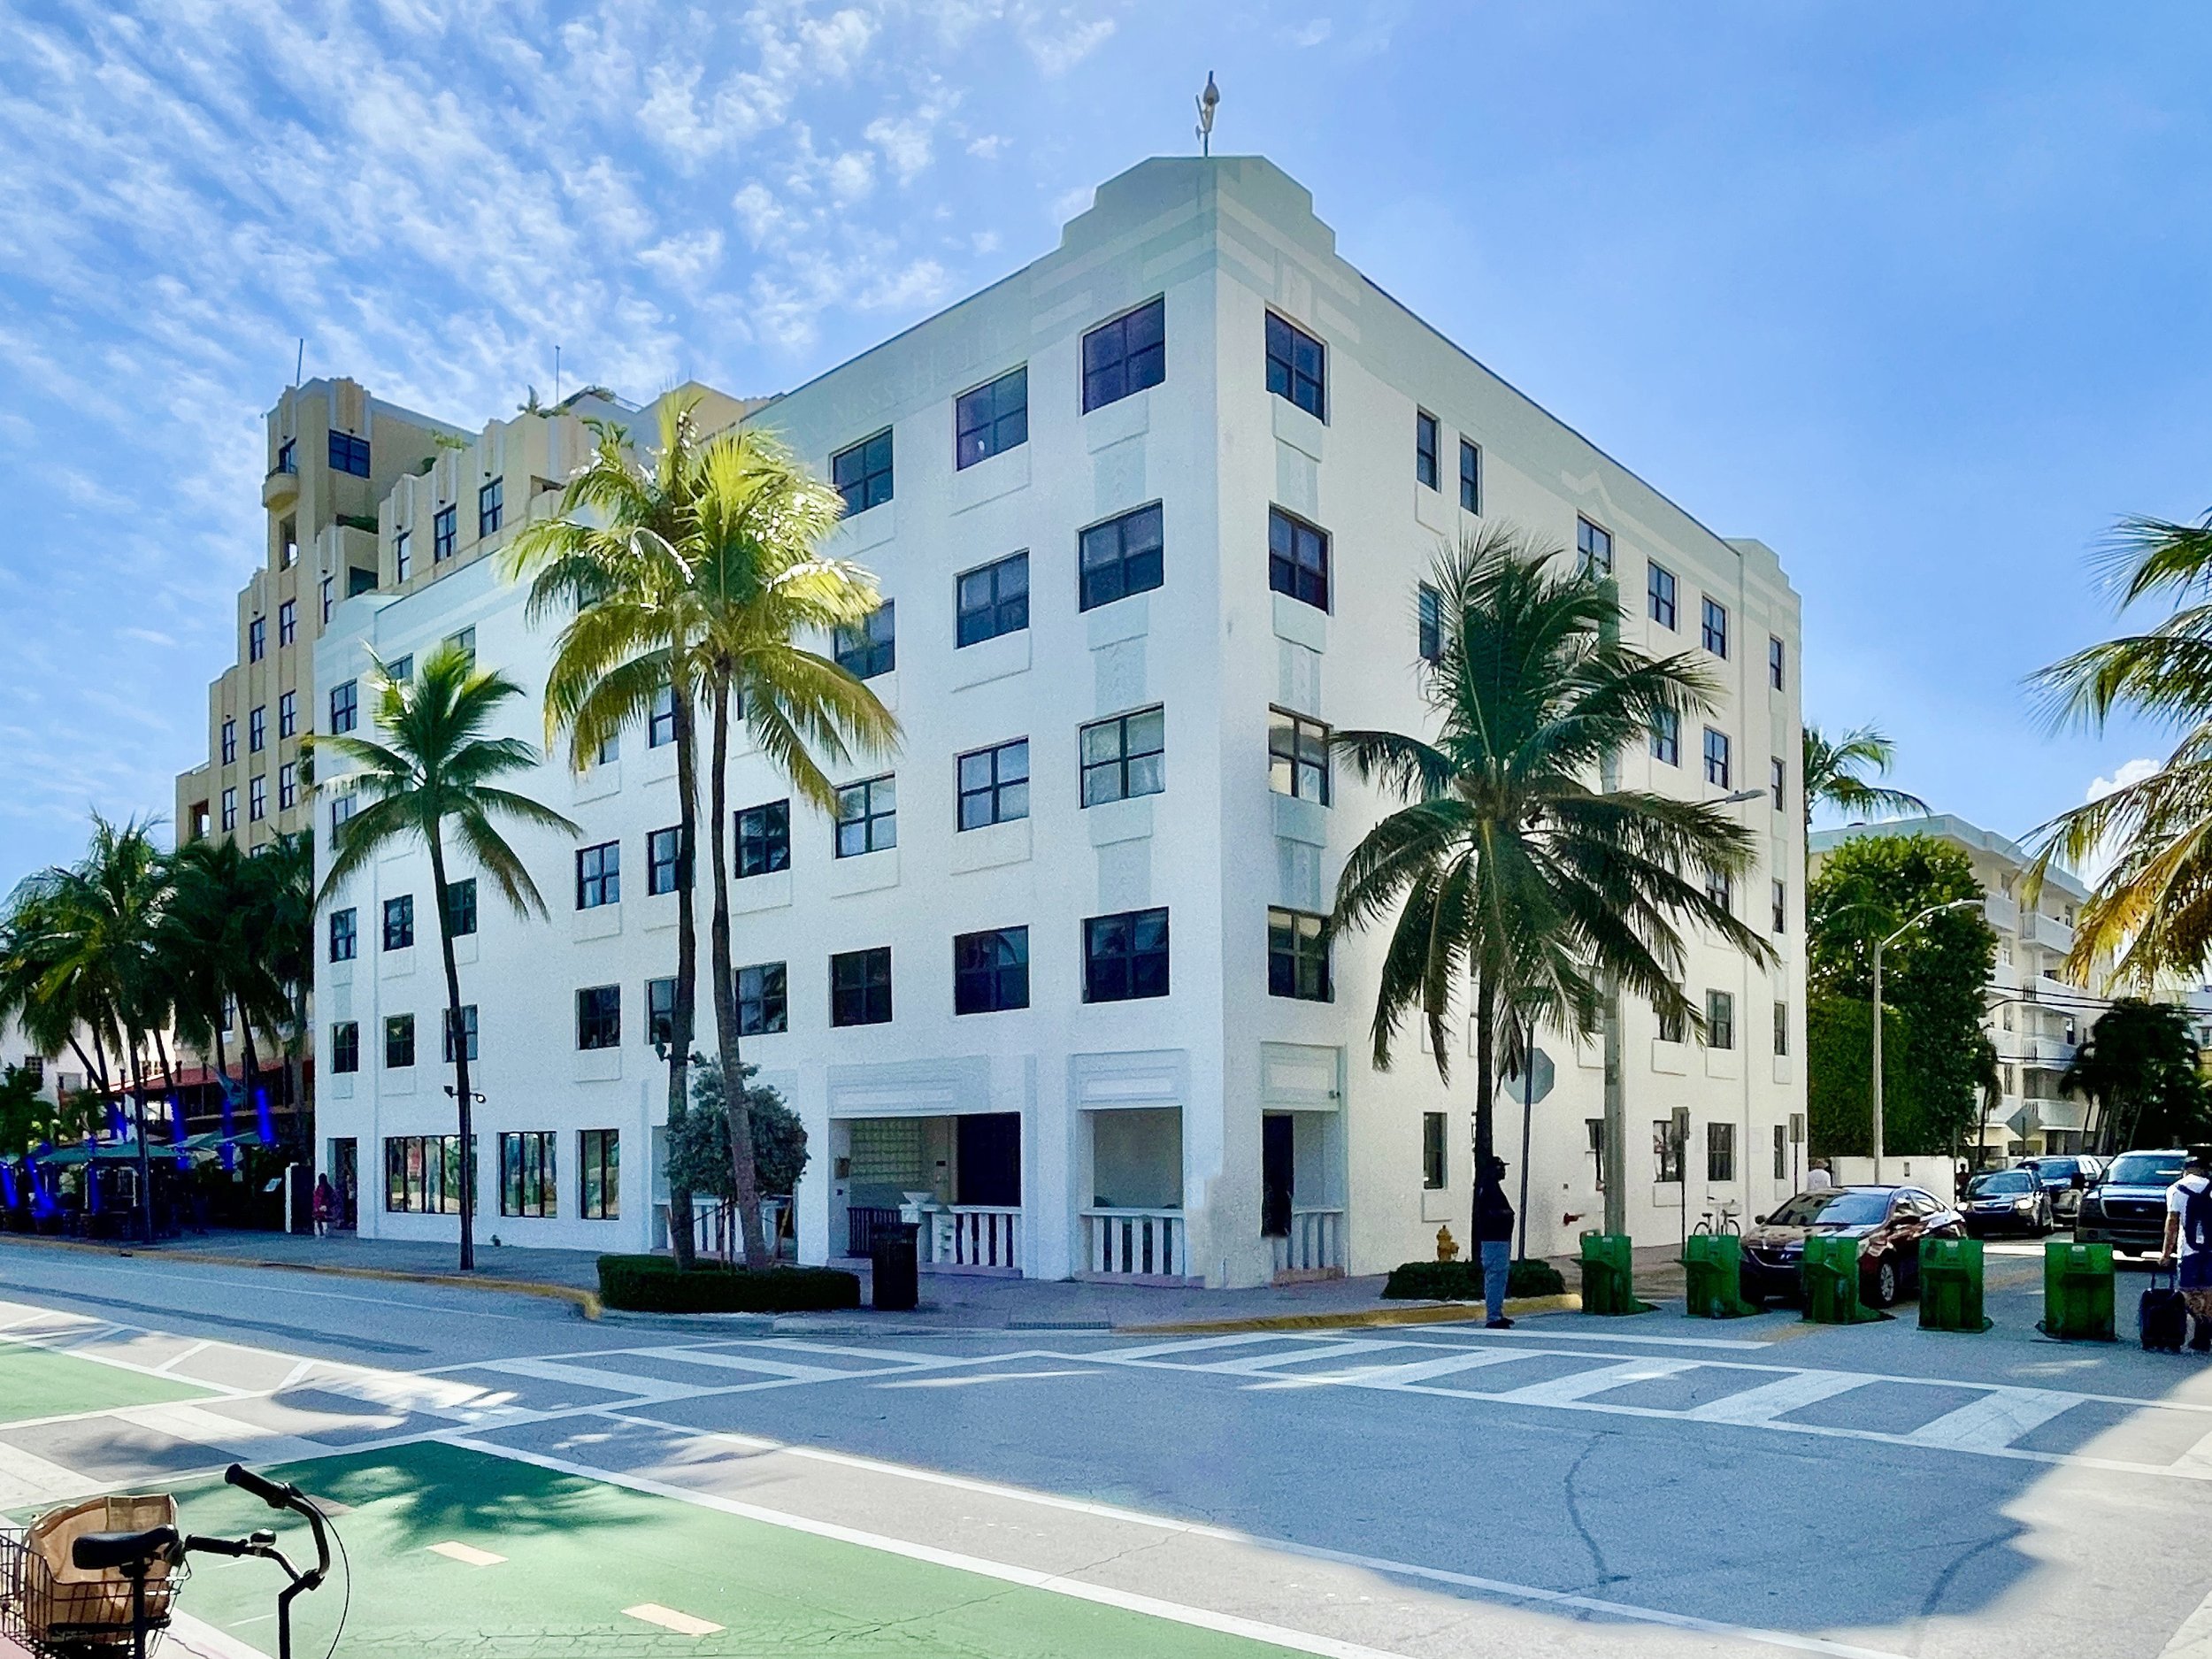  Nam June Paik’s apartment, from 1988 to 2006, Ocean Drive, Miami Beach, FL.  